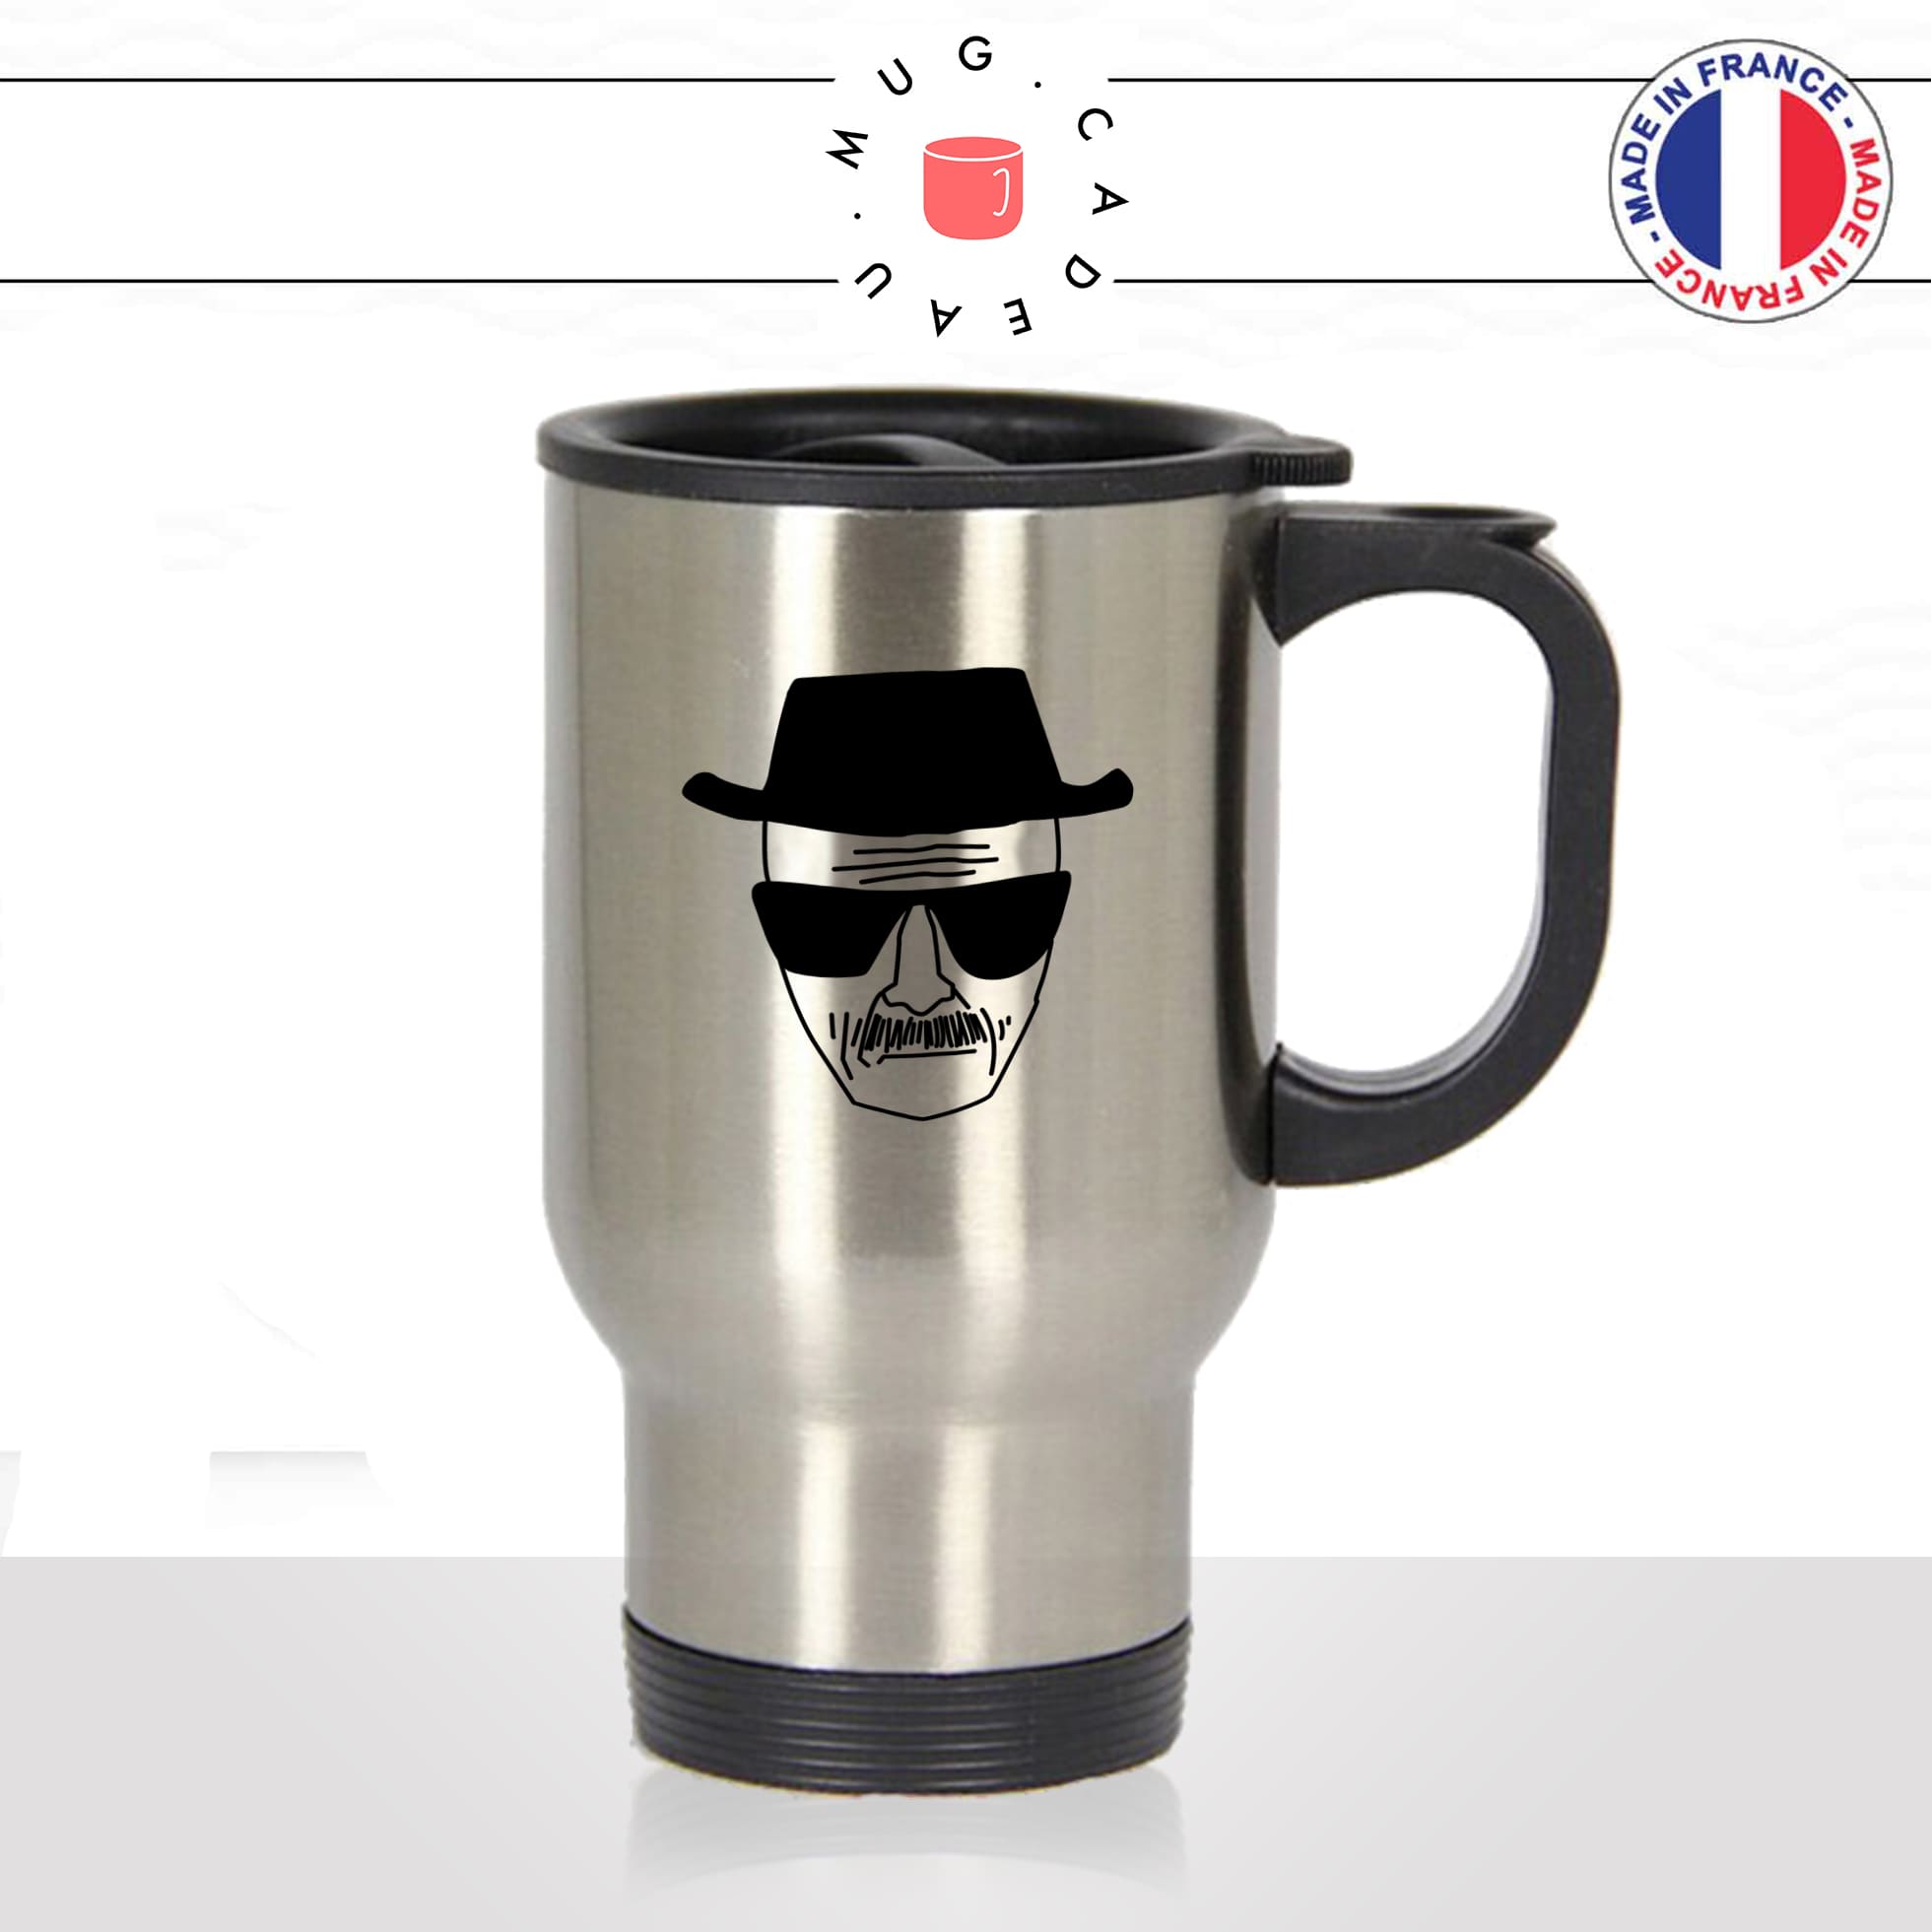 mug-tasse-de-voyage-inox-gris-café-a-emporter-beaking-bad-heisenberg-dessin-chapeau-drogue-dealer-série-cool-fun-idée-cadeau-original2